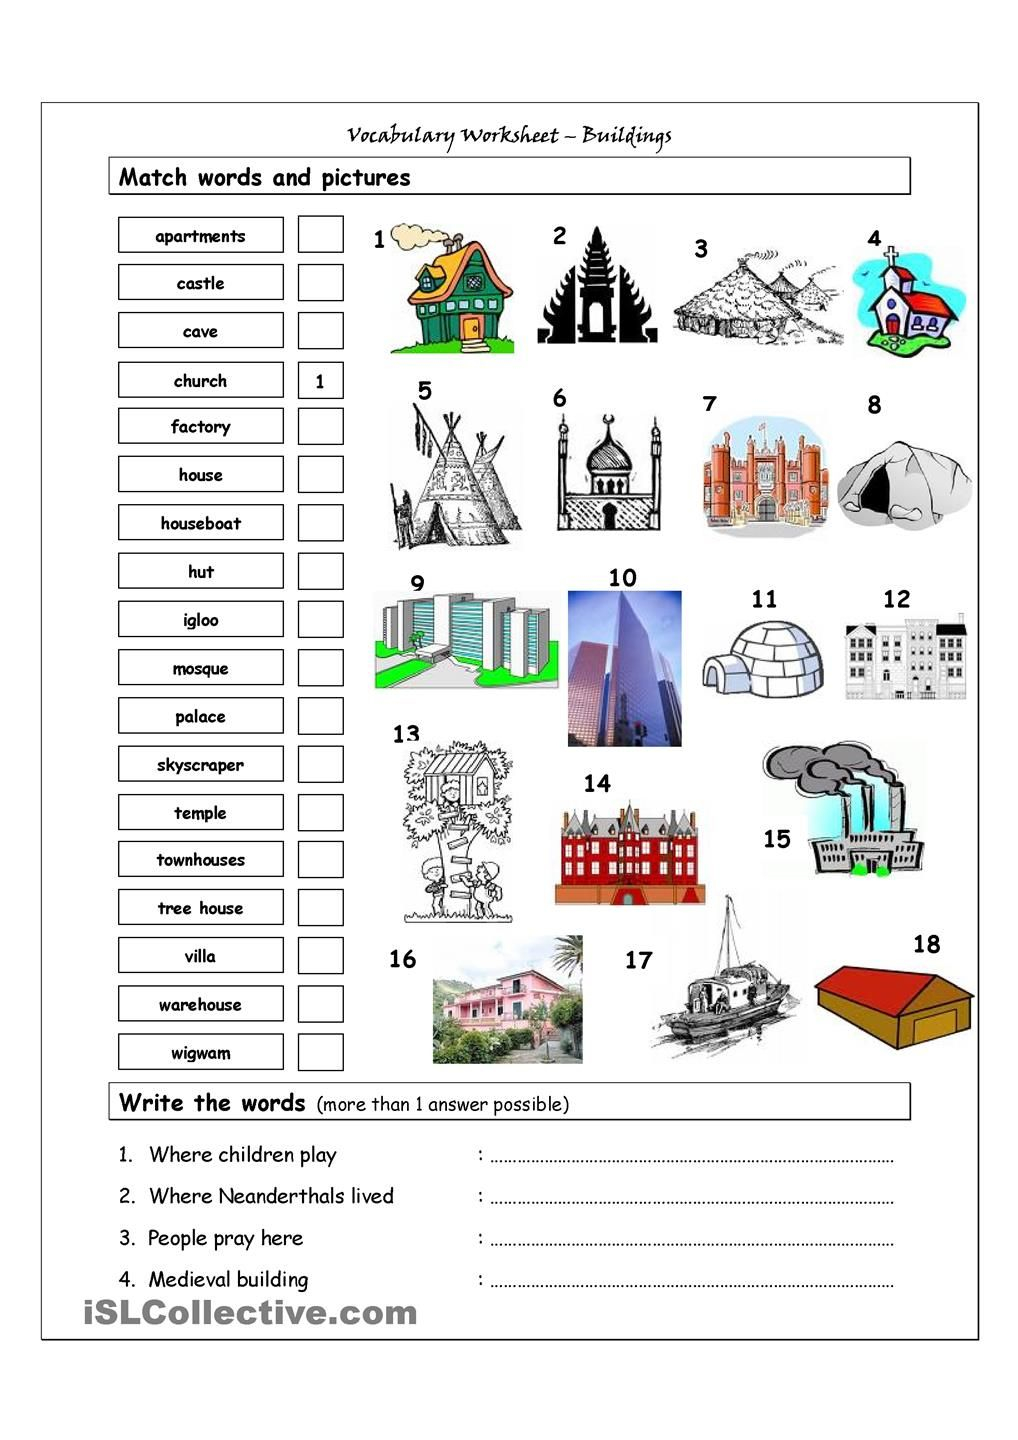 Vocabulary Matching Worksheet Buildings Life Skills Curriculum